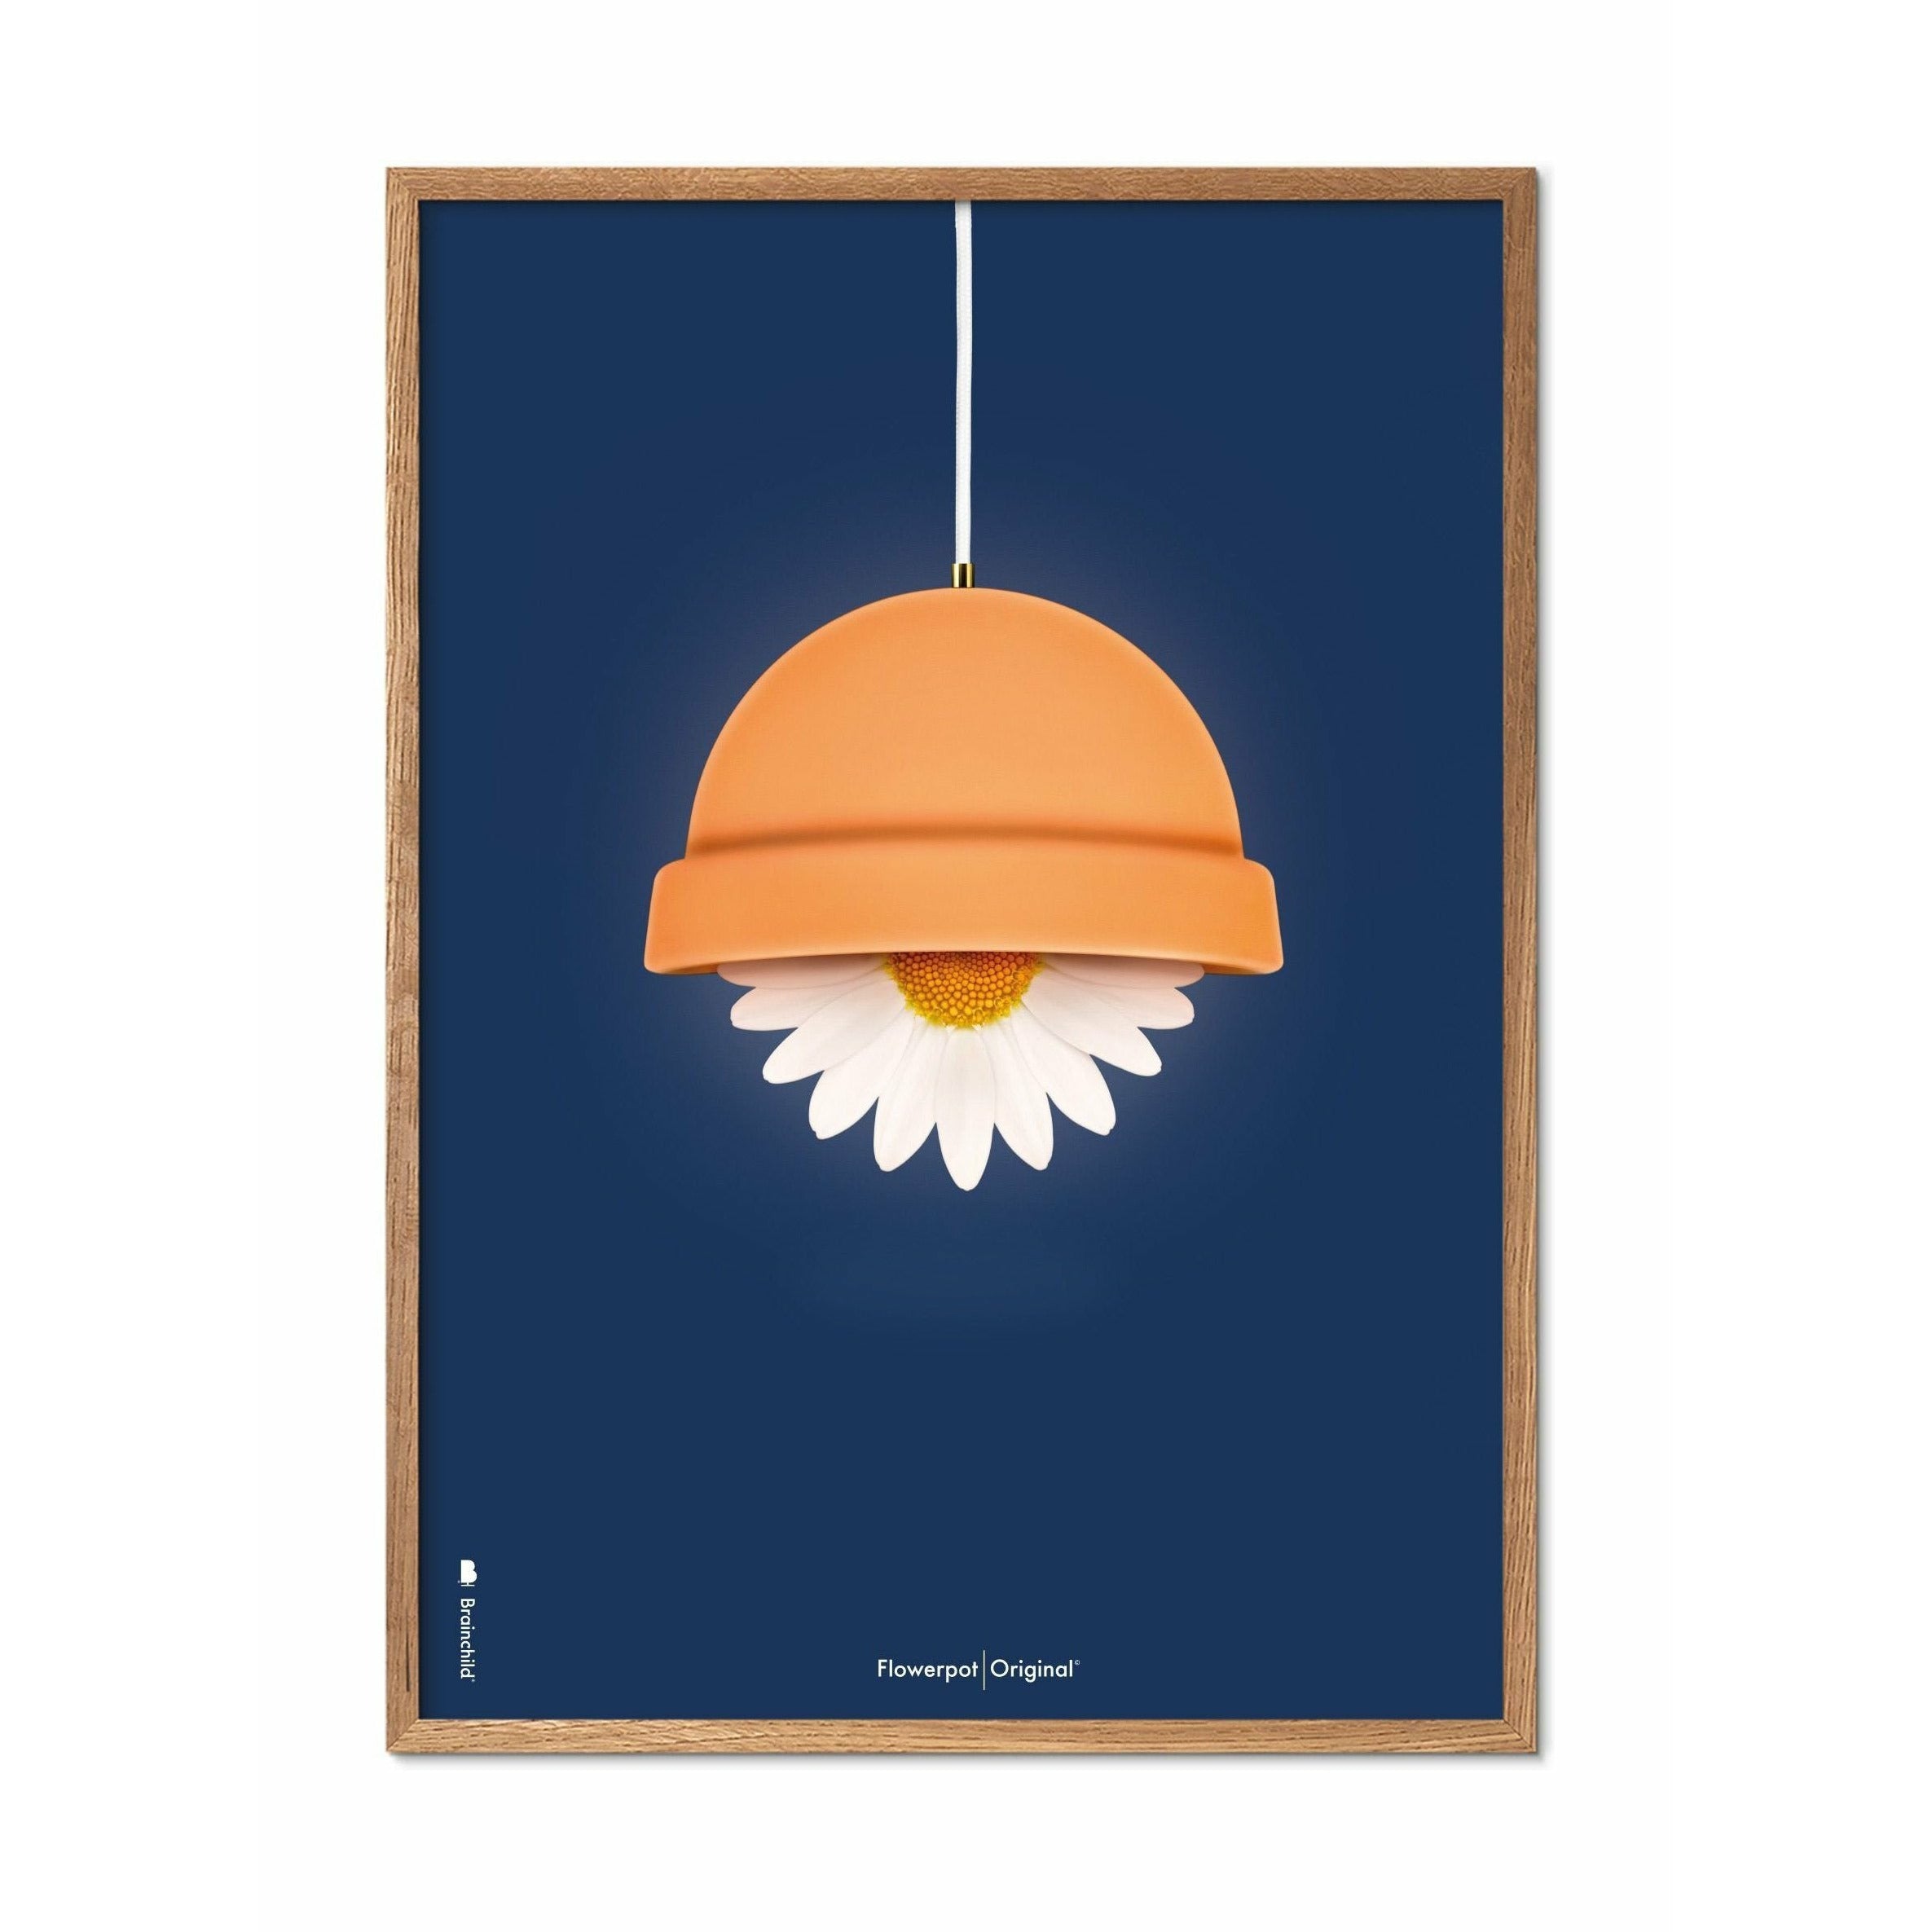 Brainchild Flowerpot Klassisk Plakat, Ramme I Lyst Træ 50X70 Cm, Mørkeblå Baggrund